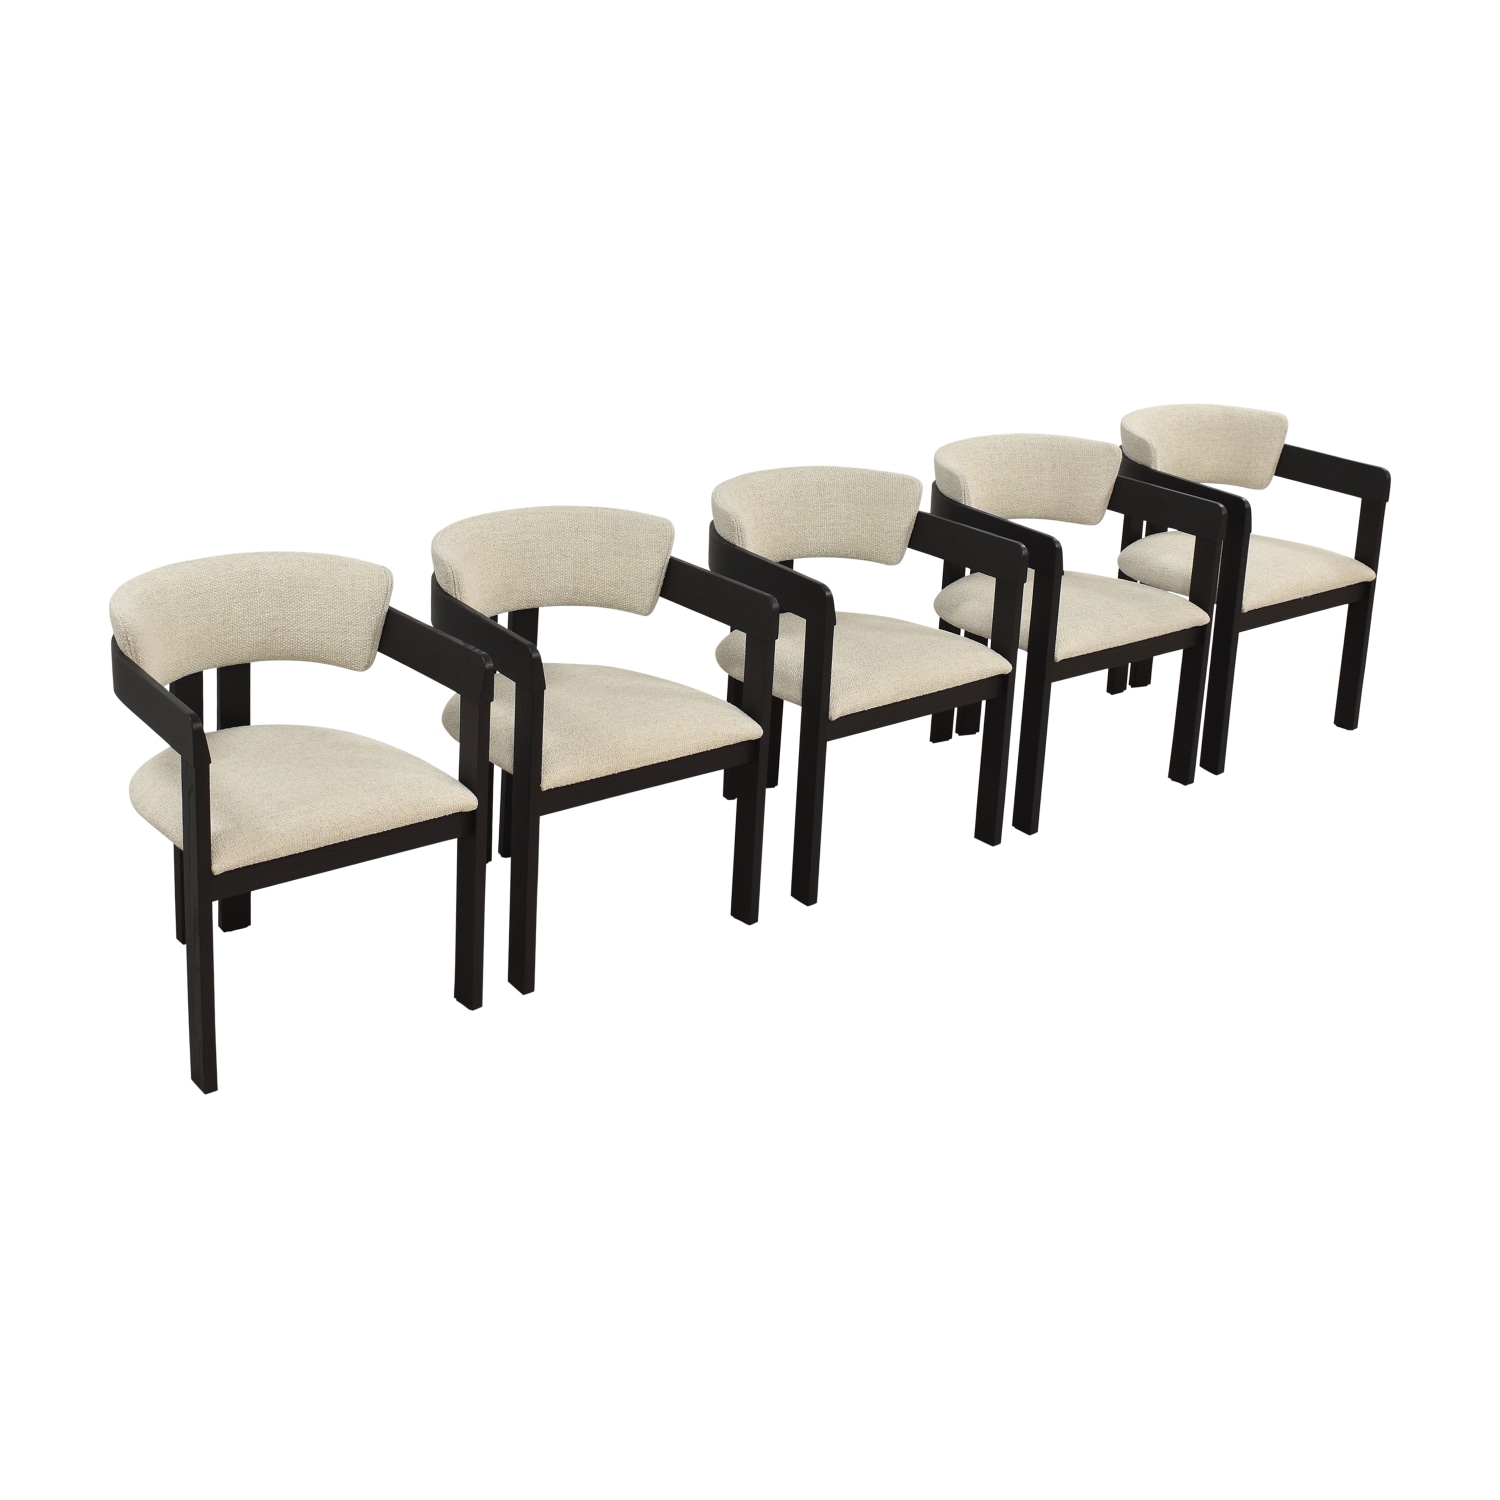 https://res.cloudinary.com/dkqtxtobb/image/upload/f_auto,q_auto:best,w_1500/product-assets/417314/arhaus/chairs/dining-chairs/used-arhaus-rodin-dining-chairs.jpeg